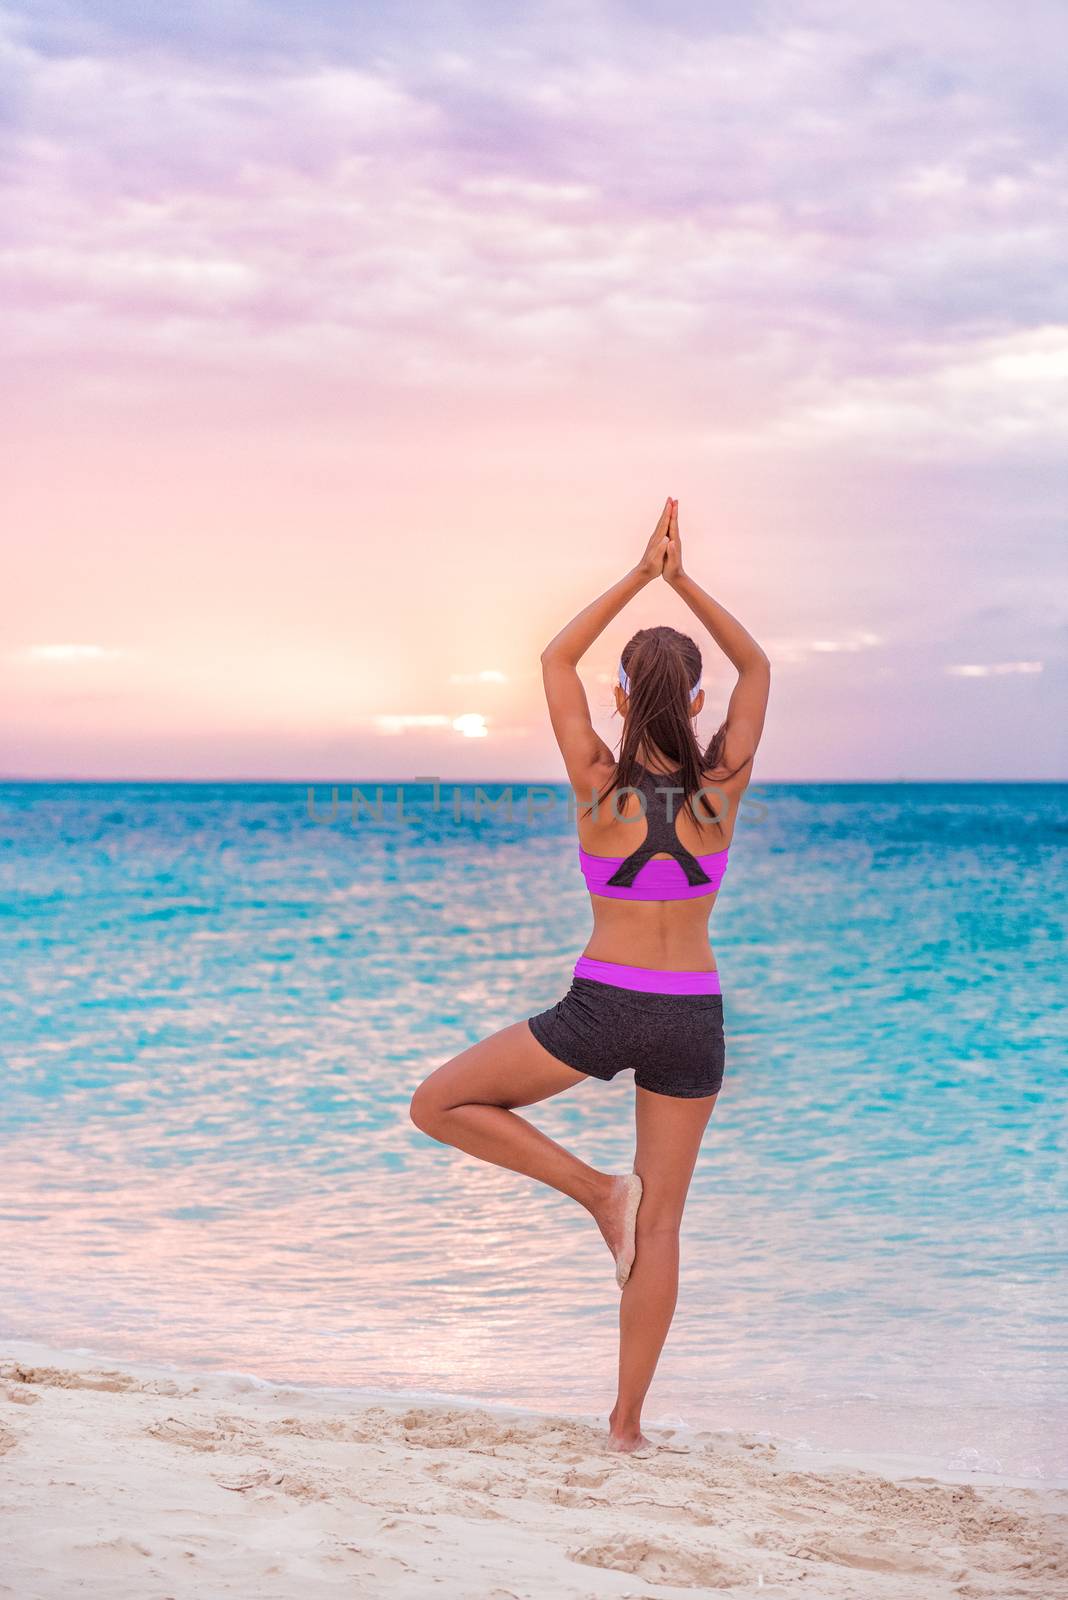 Yoga wellness class on beach at sunset. Girl practicing meditation standing on one leg training balance barefoot on sand enjoying sun and ocean view by Maridav